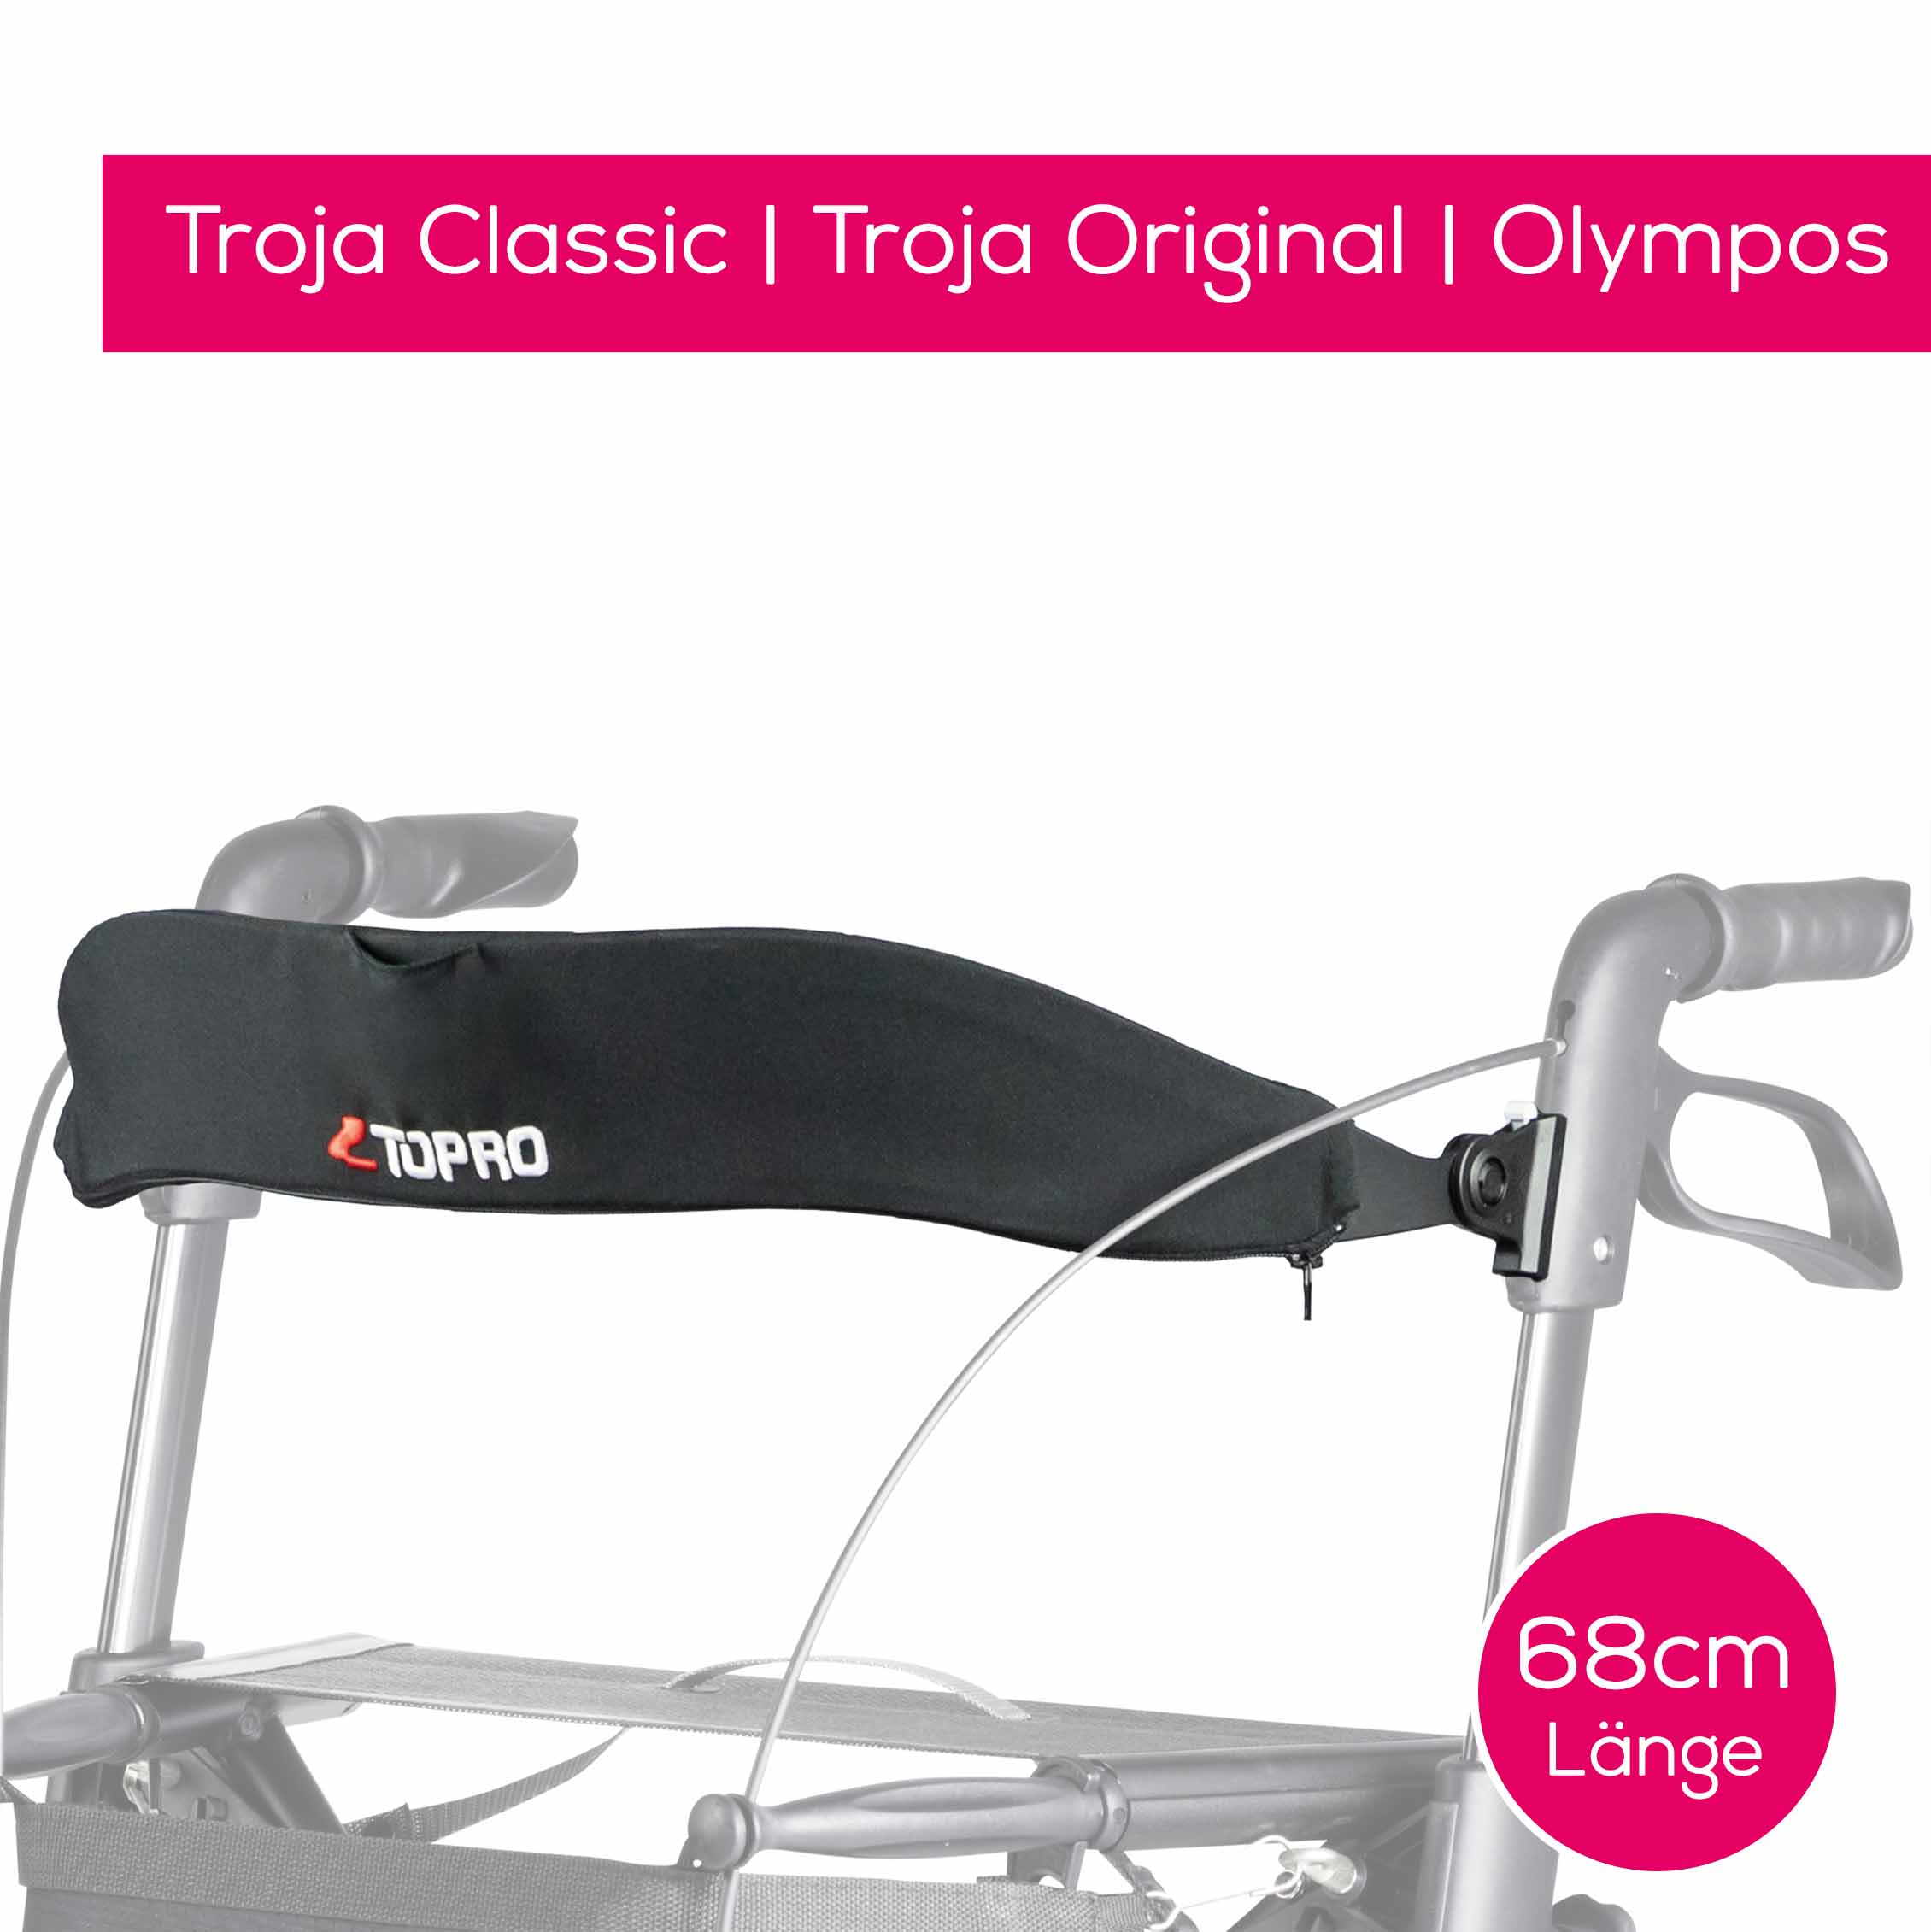 Rollator Rückengurt mit Polsterung - Troja Classic | Troja Original | Olympos  - 68 cm